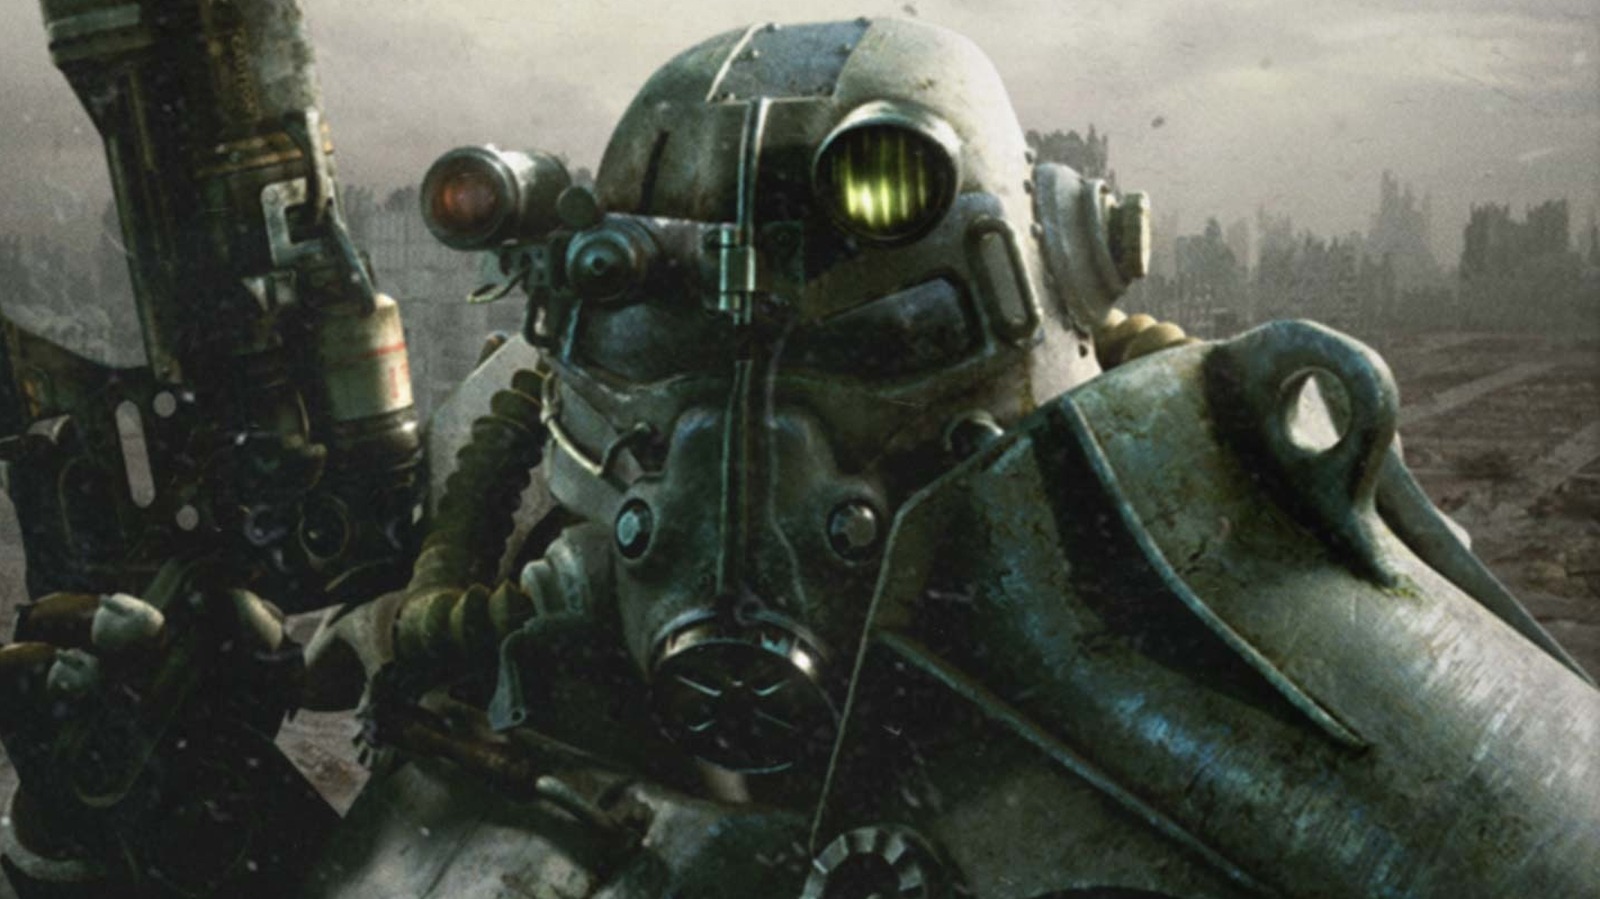 Fallout Shelter - Metacritic